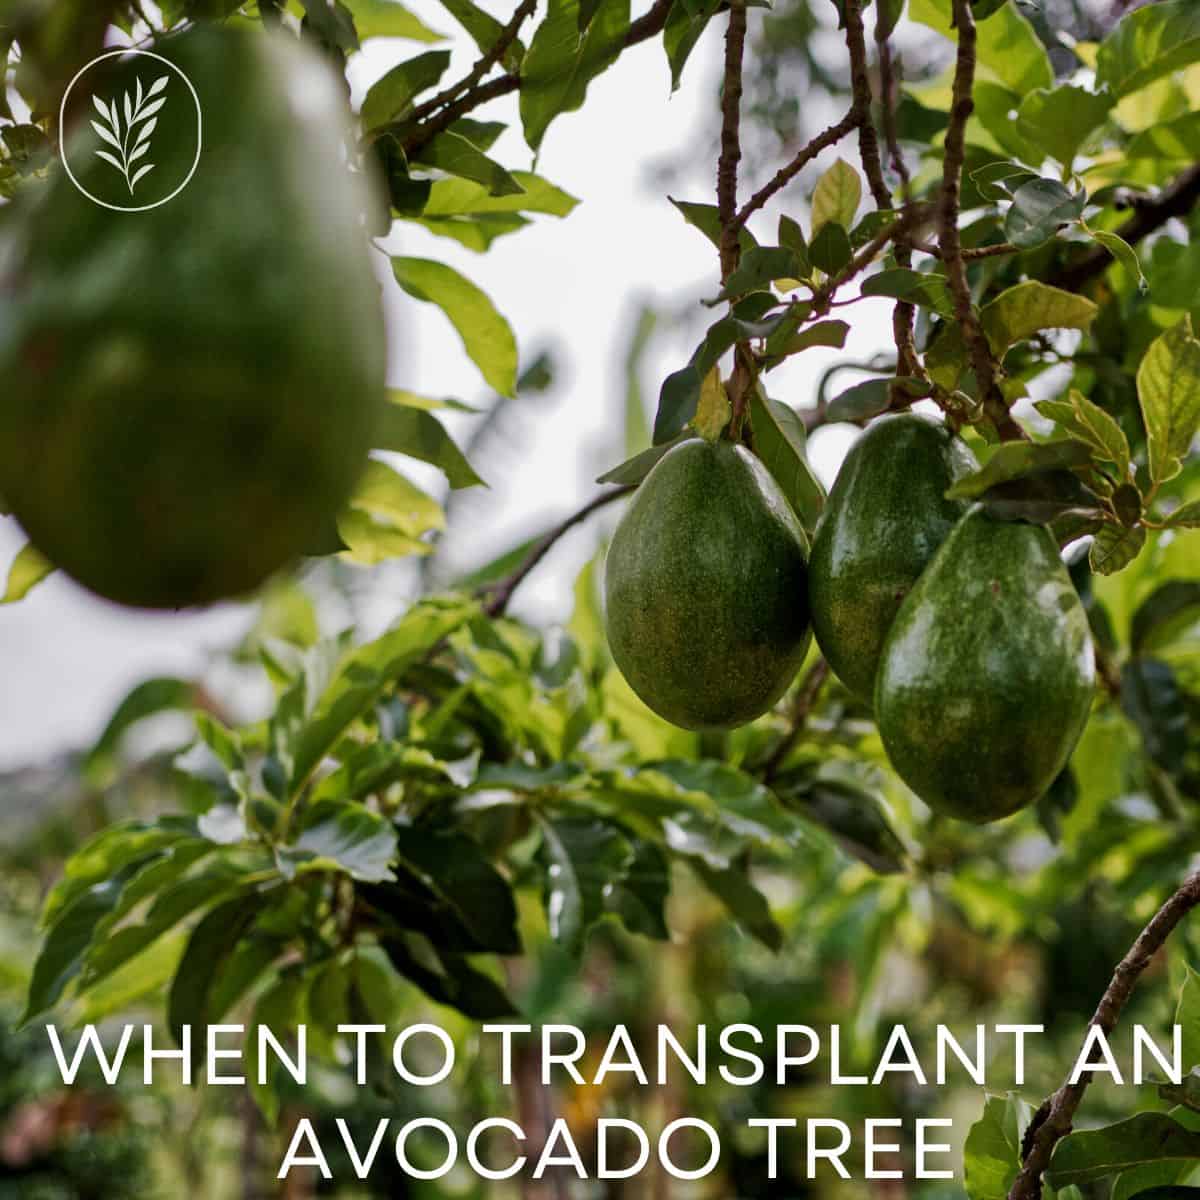 When to transplant an avocado tree via @home4theharvest